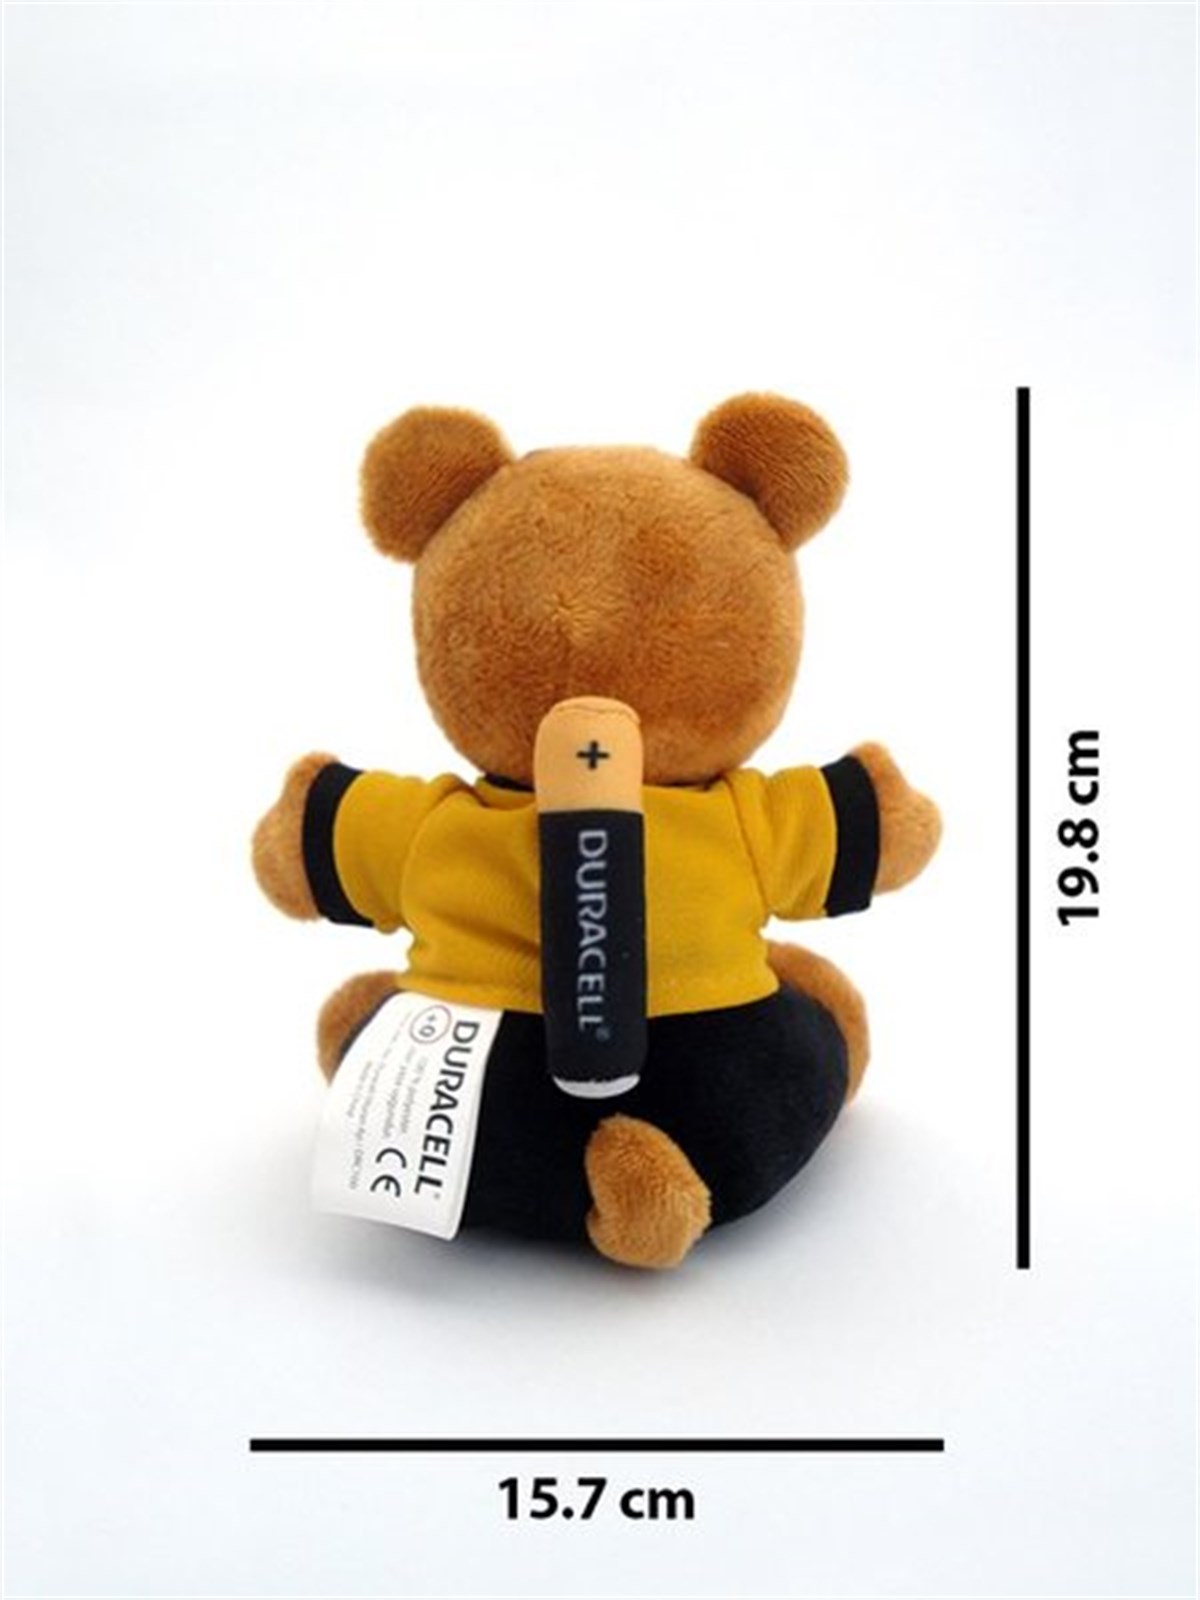 Duracell Turbo Aaa Battery 12 pcs. + With Teddy Bear Gift-LeylekKapida.com